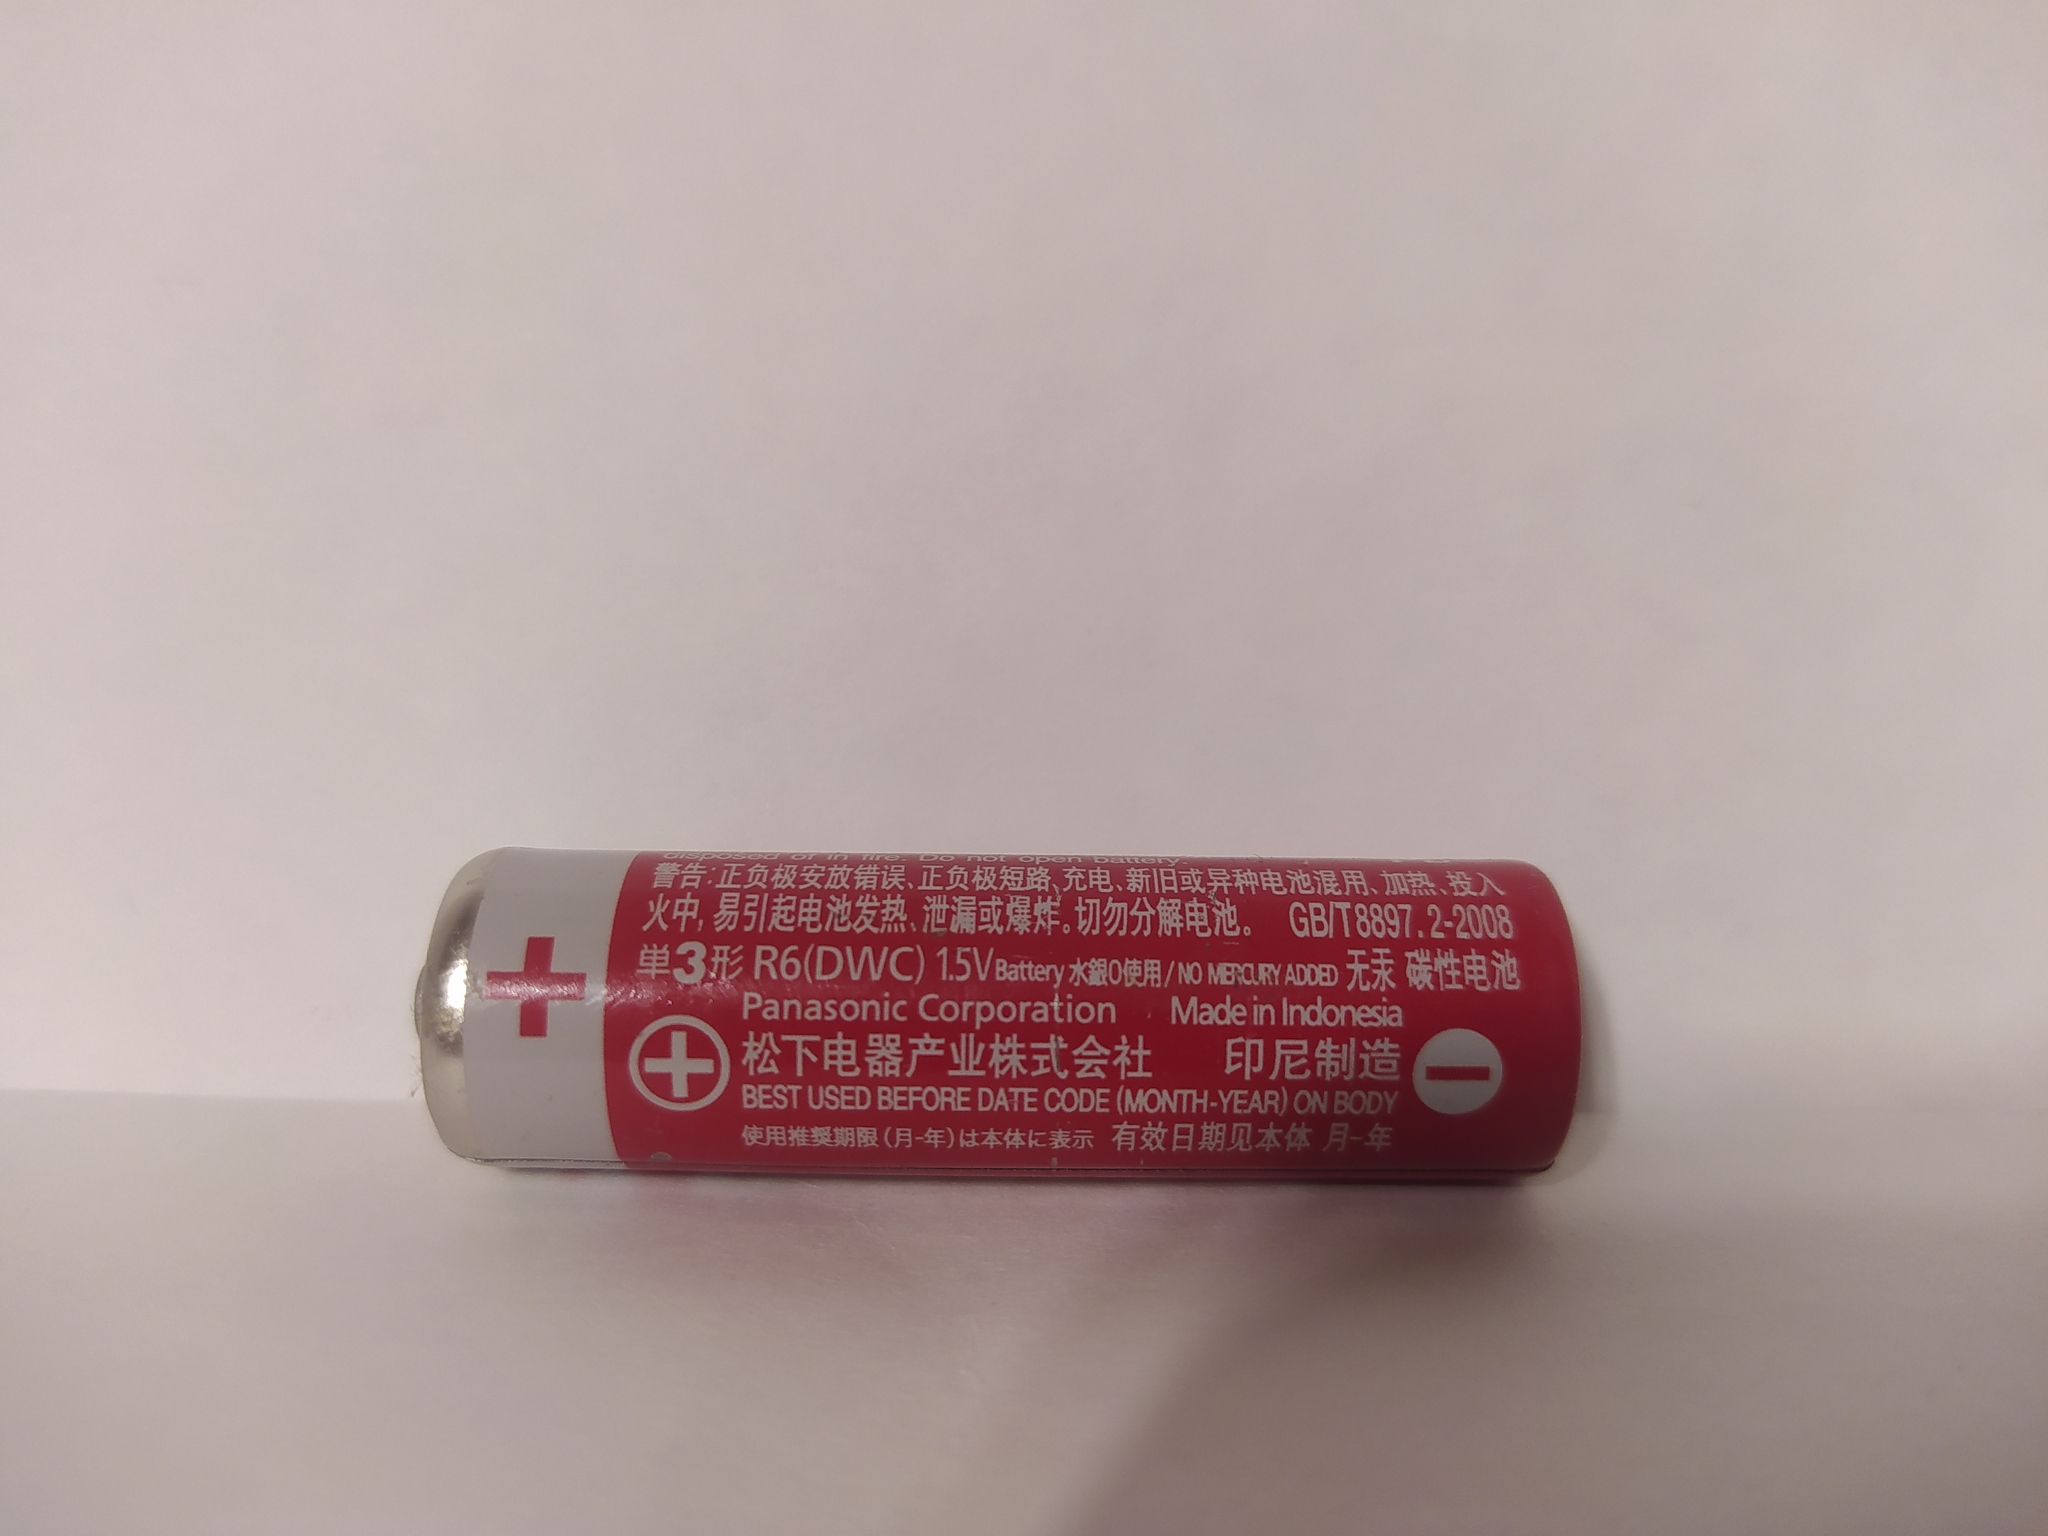 Batteries - My, Battery, TV remote, Longpost